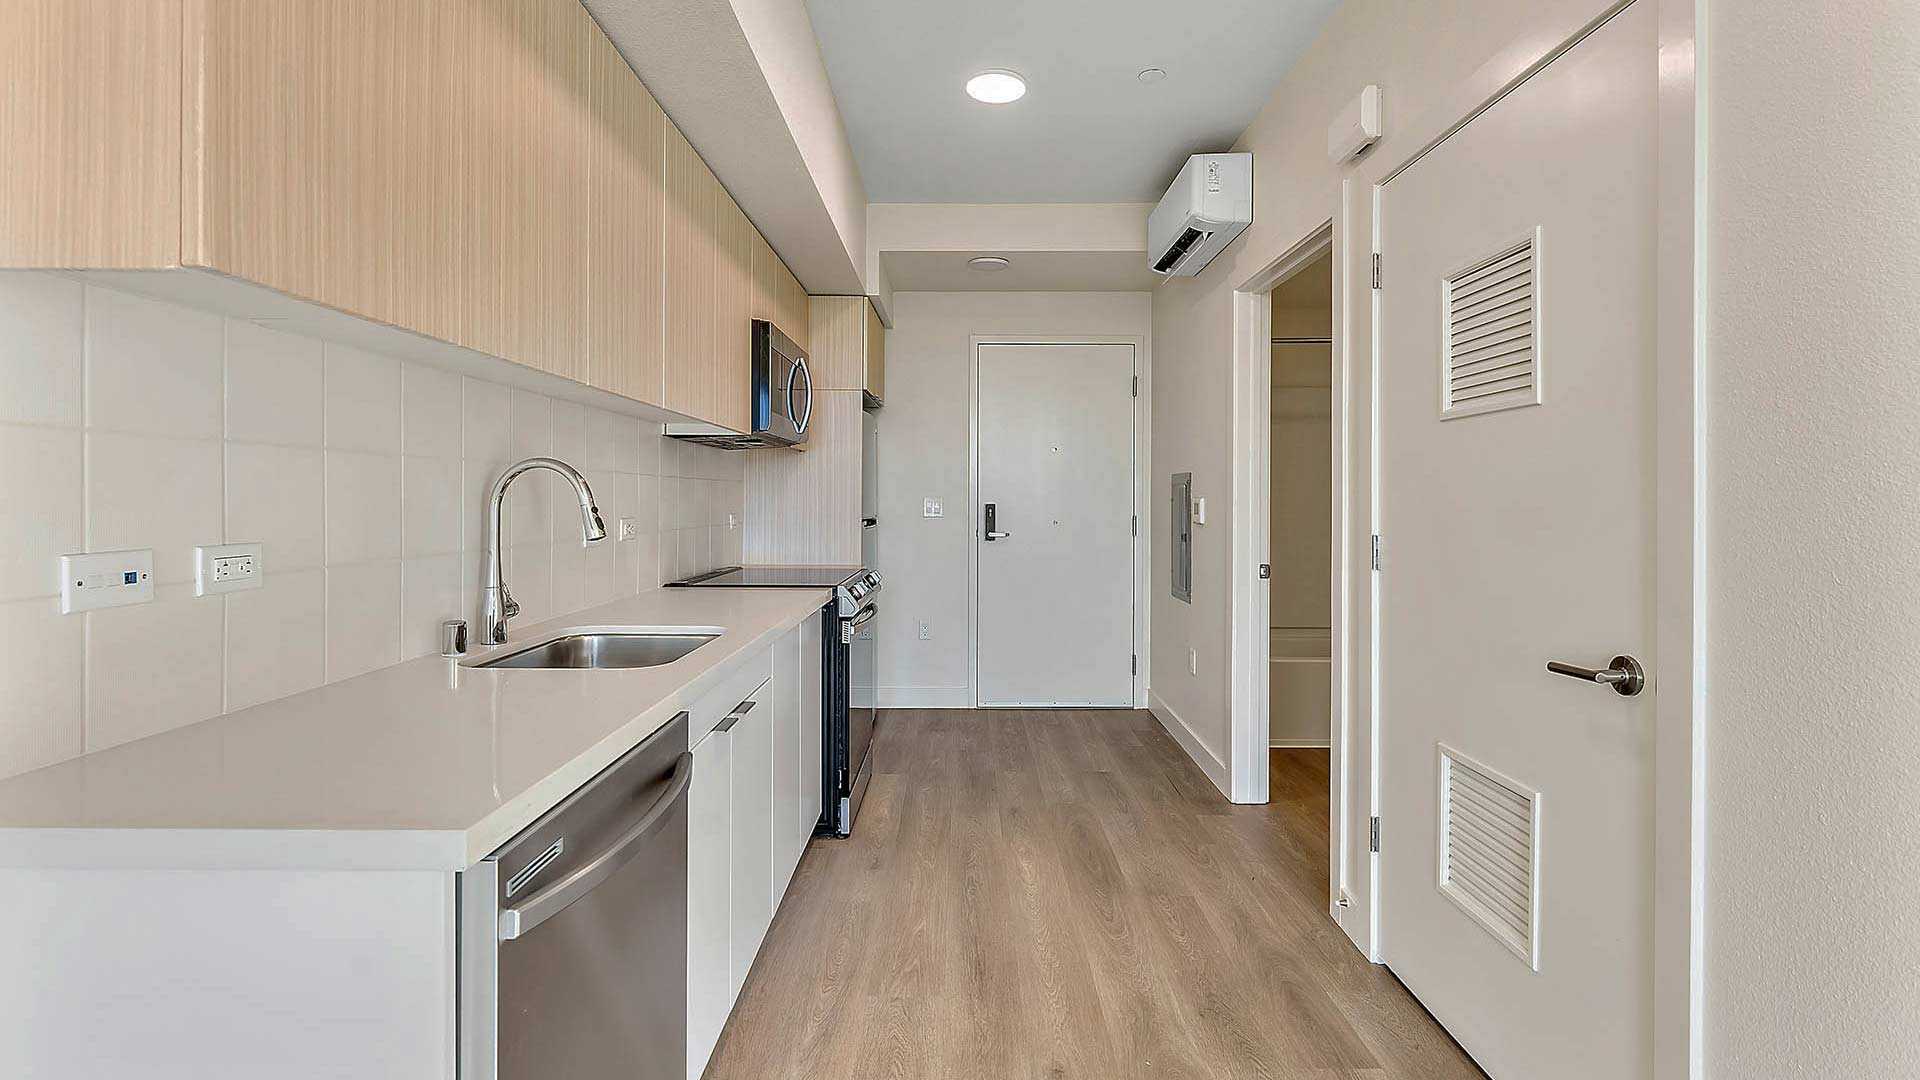 Blake apartments a1 floorplan kitchen 1